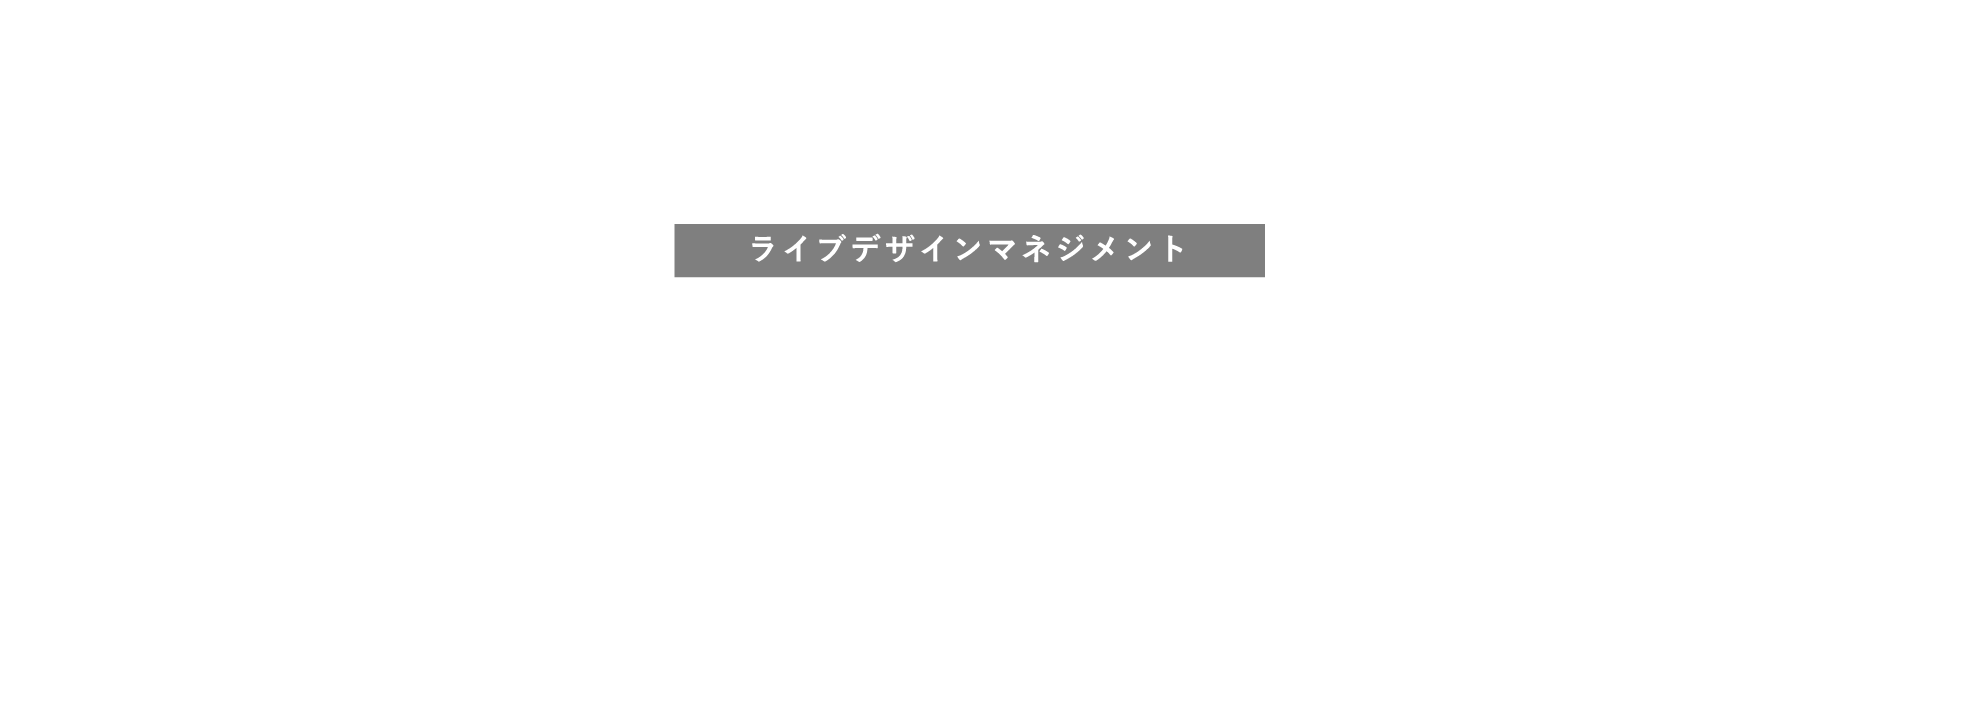 Live Design Management1日から100年を考える賃貸経営